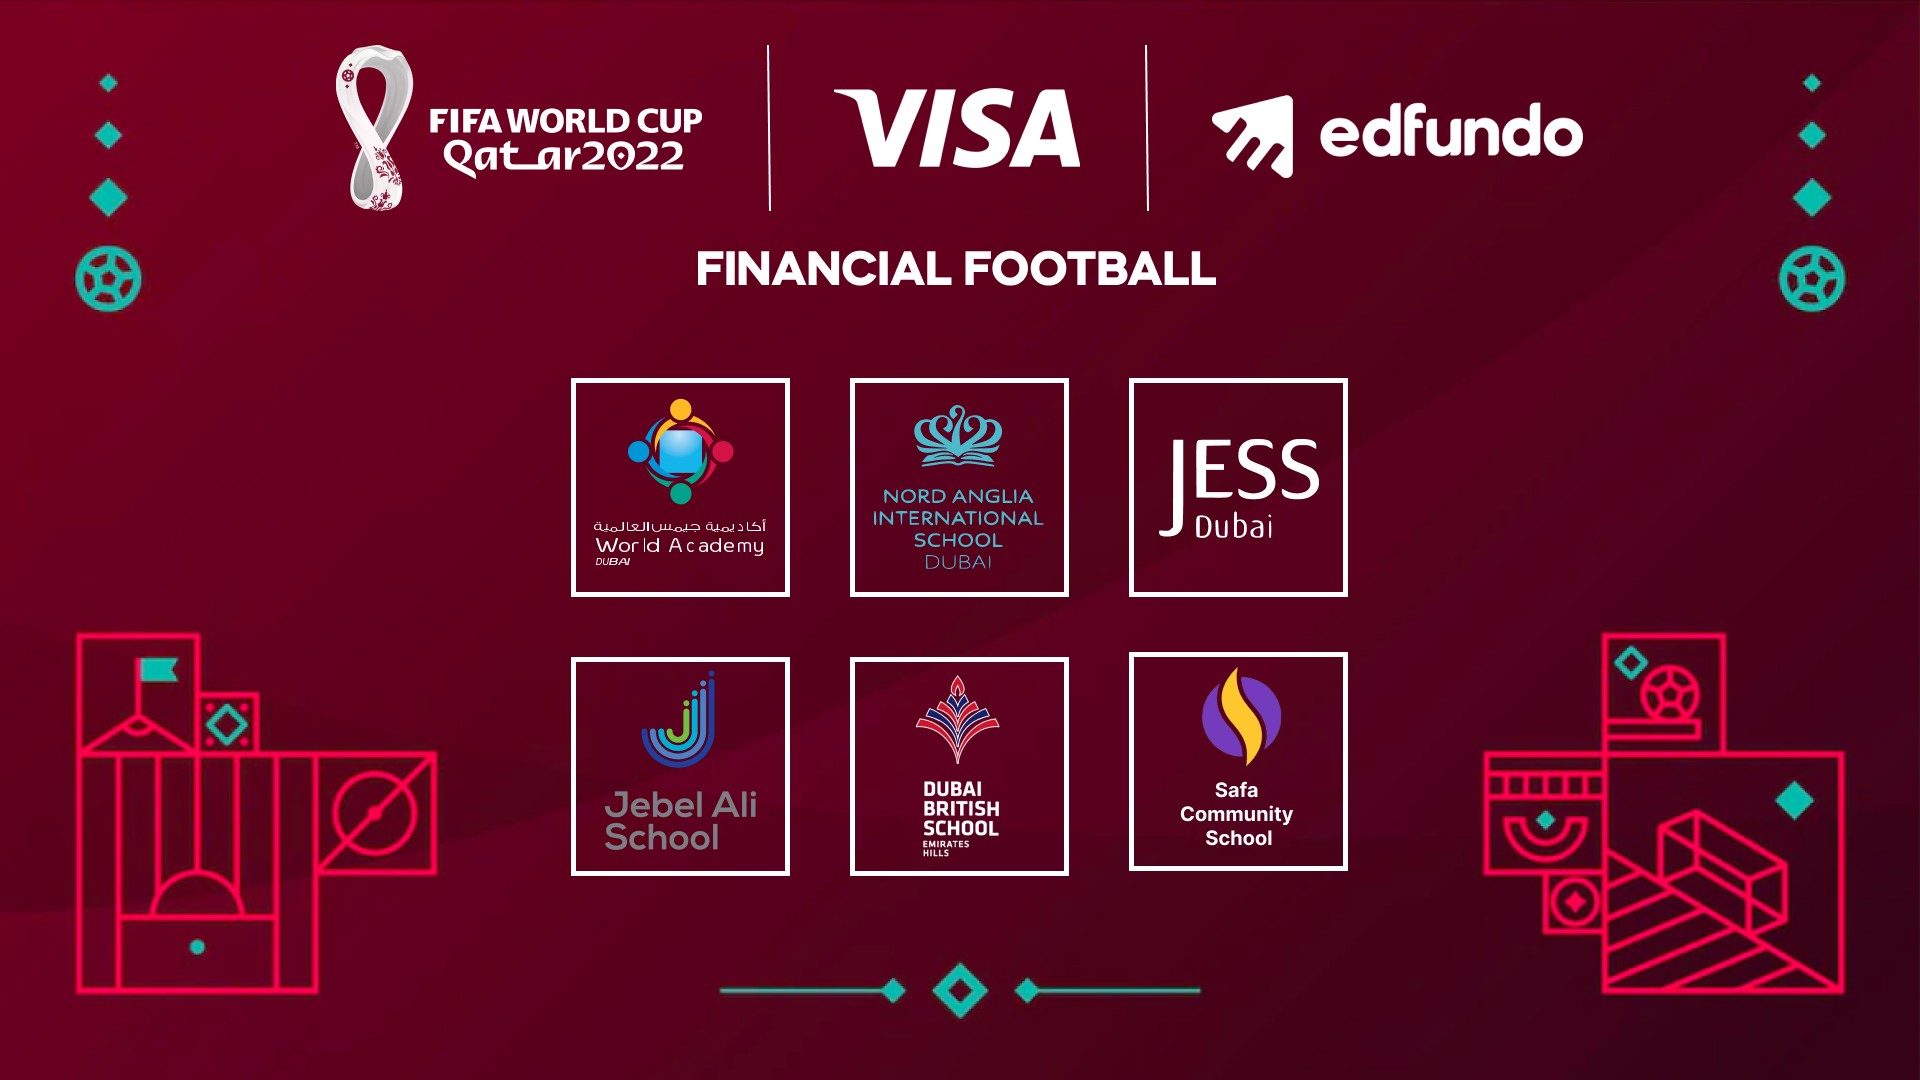 Dubai Schools that are involved in DASSA and Visa Financial Football